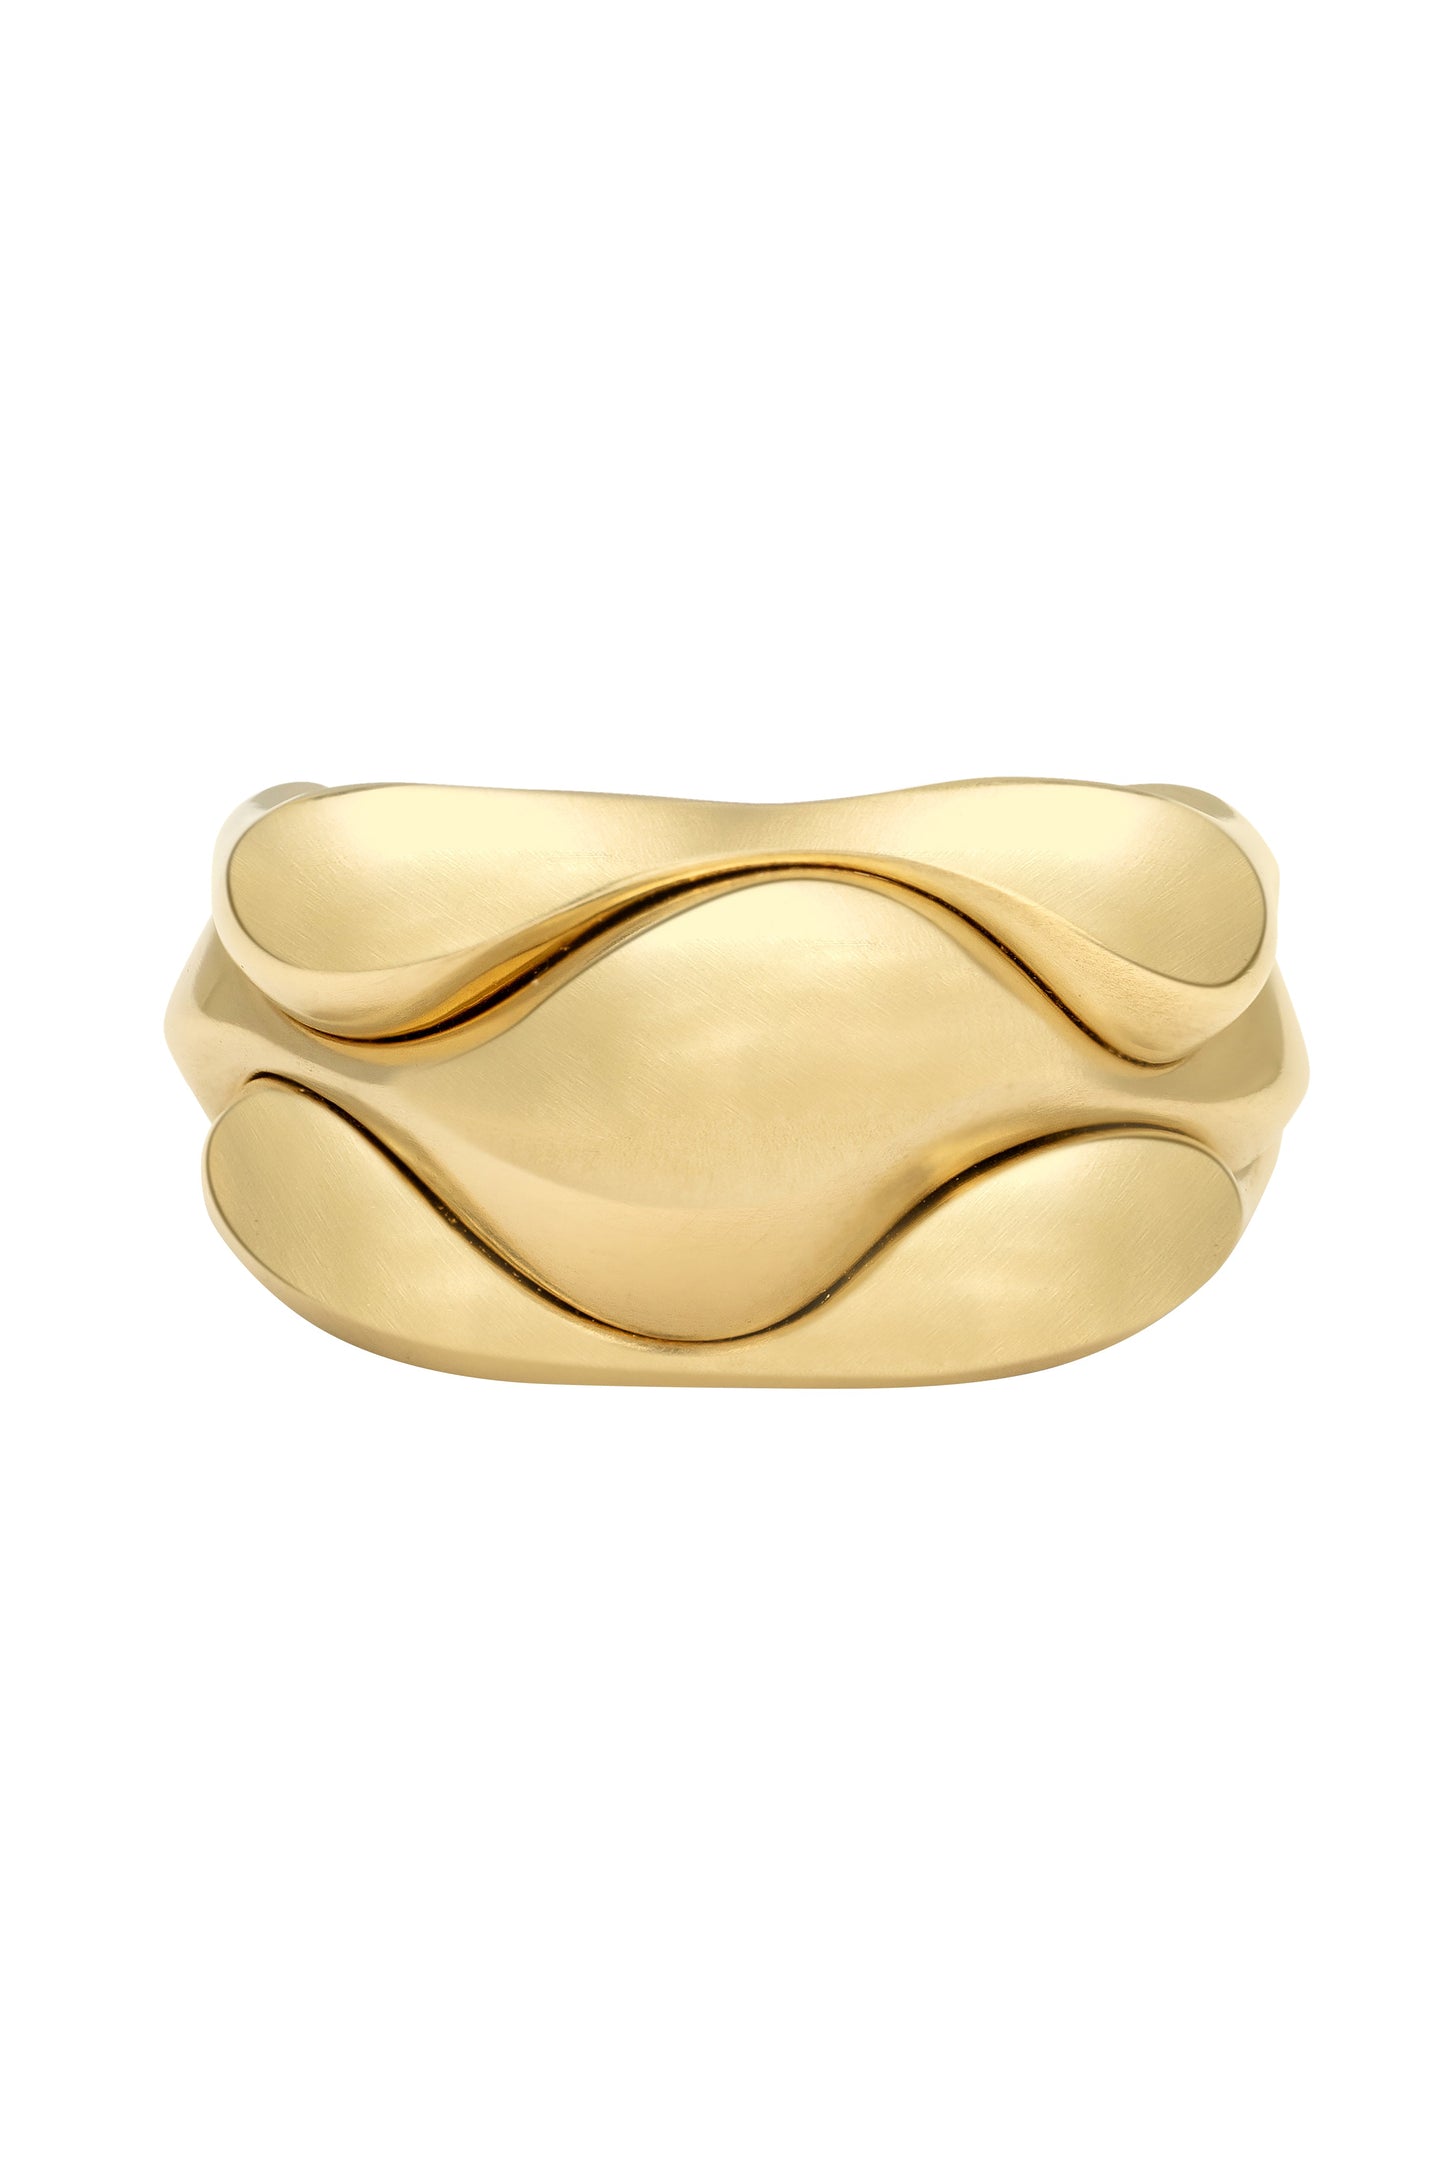 VRAM-Cayrn III Ring-YELLOW GOLD